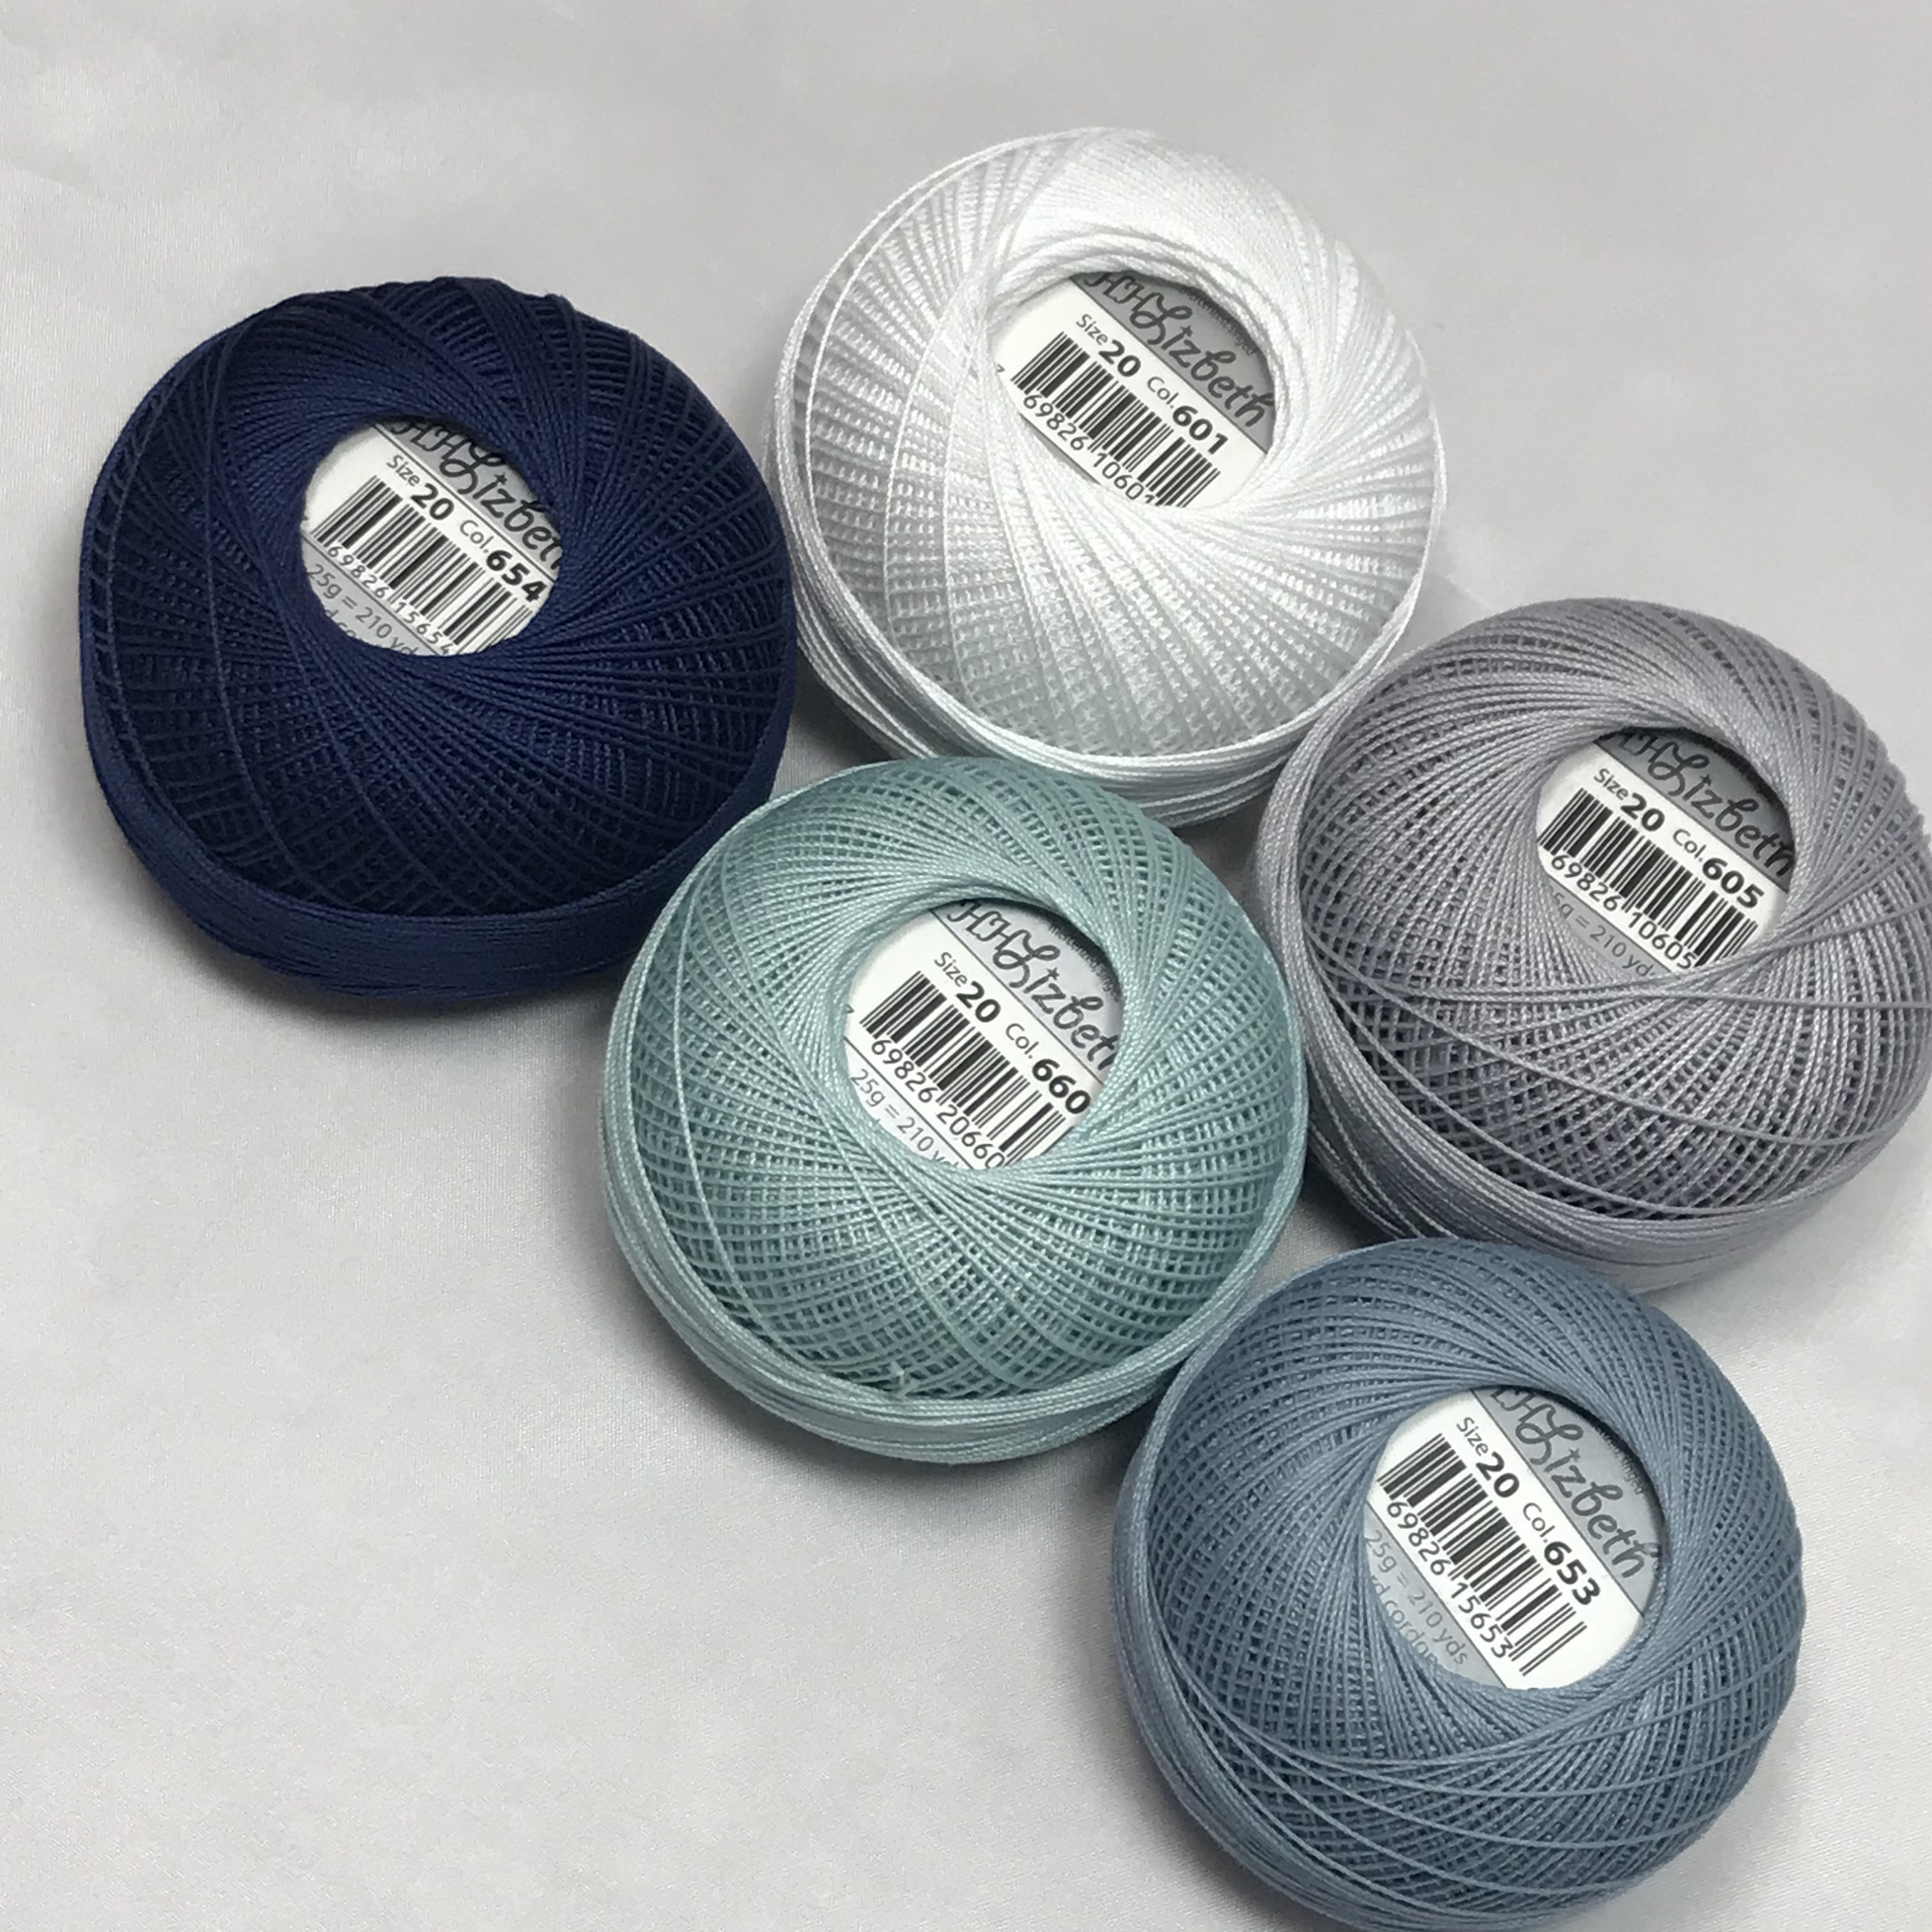 Handy Hands 210-Yard Lizbeth Cotton Thread, 25gm, Medium Blue